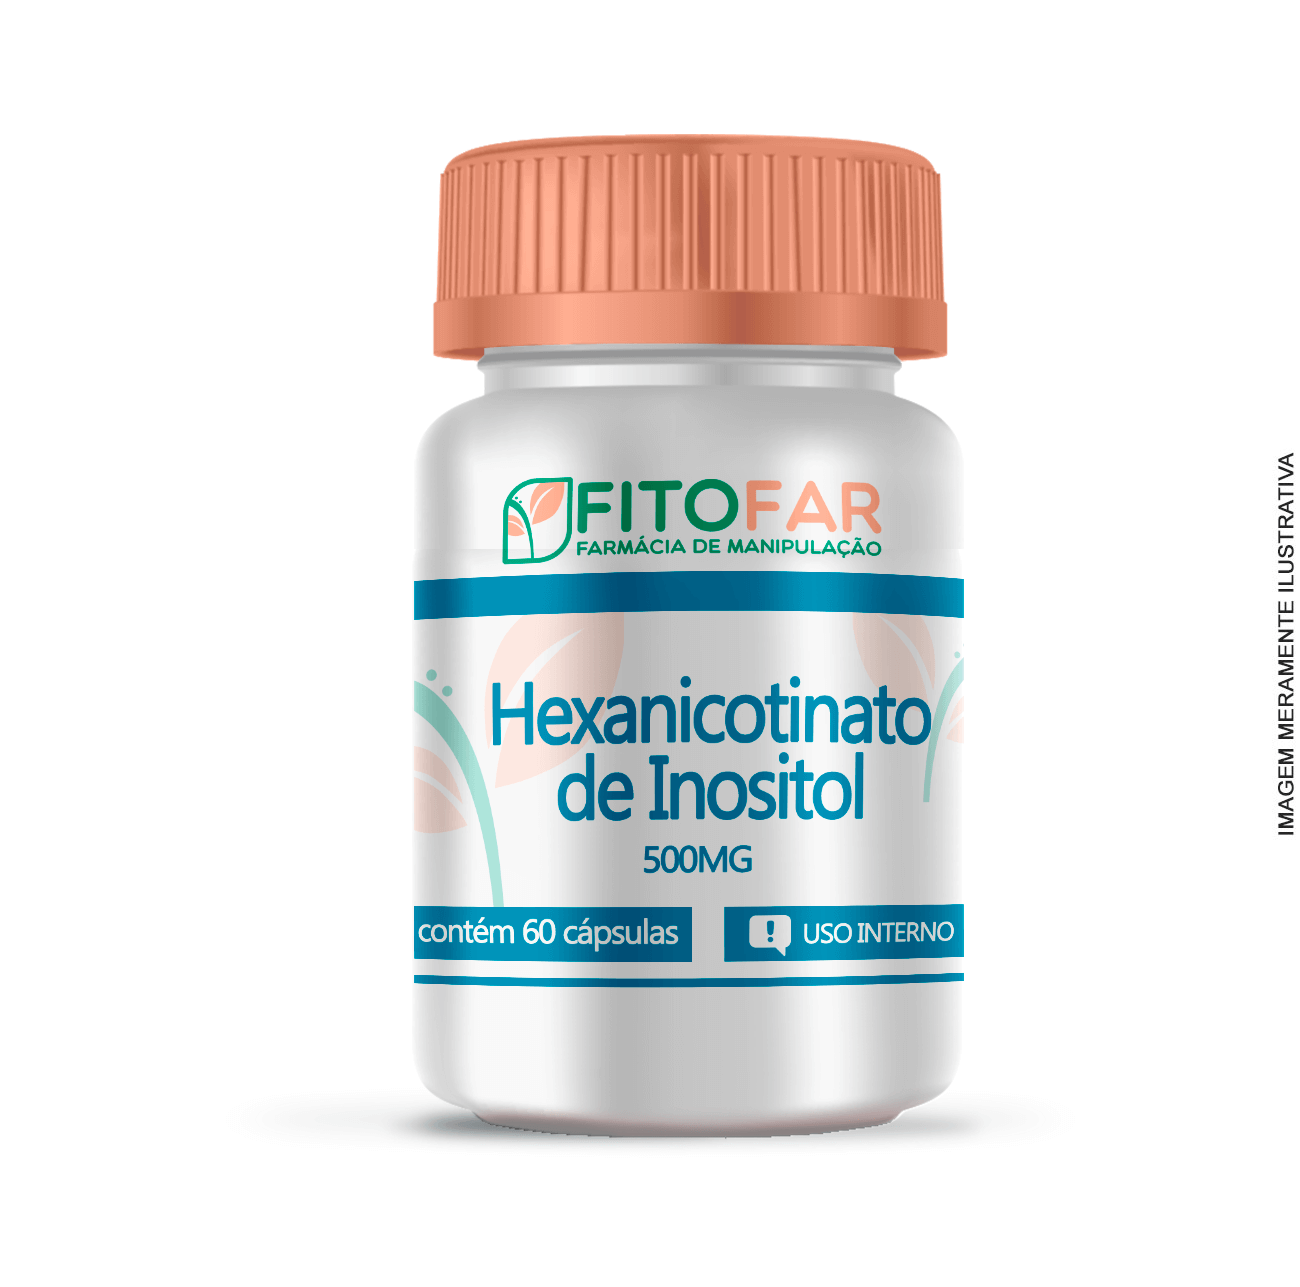 Hexanicotinato de Inositol (VITAMINA B3 NO FLUSHING) 500MG - 60 Cápsulas.